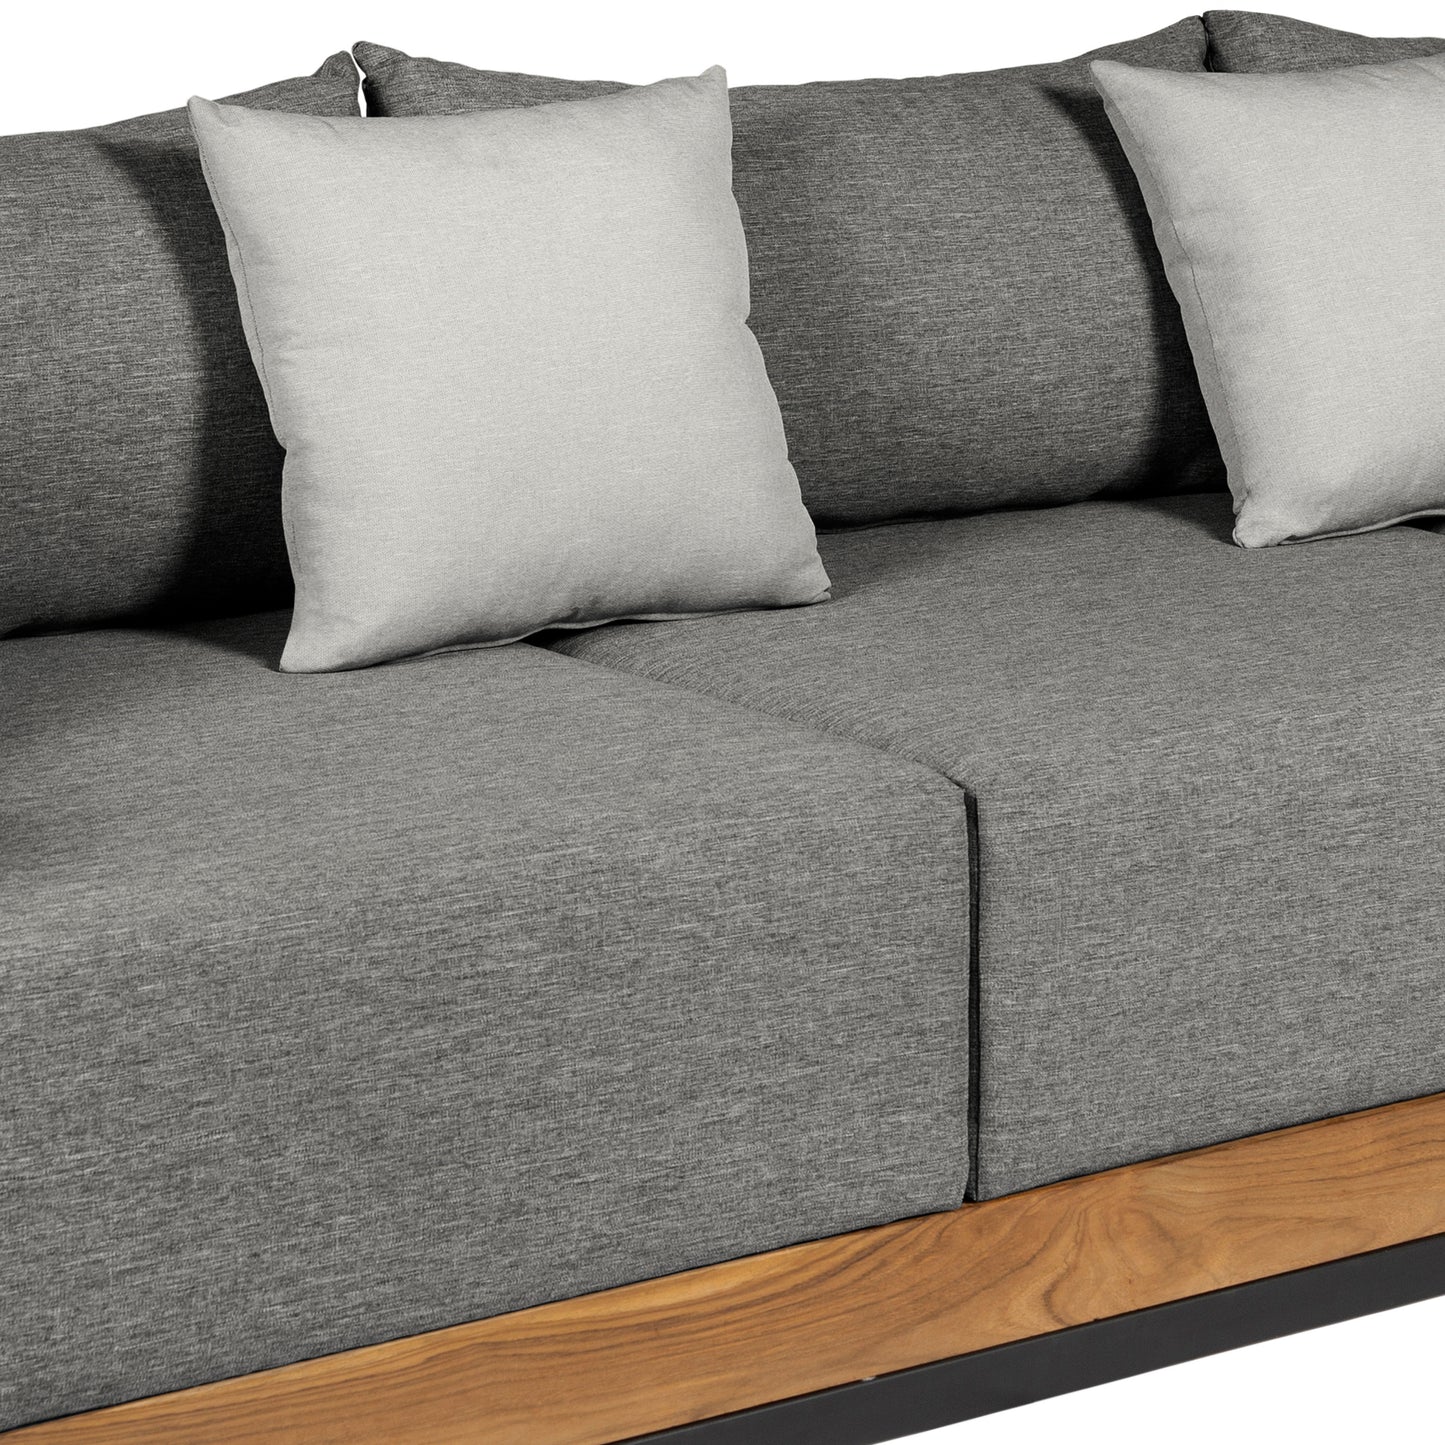 Artesia Outdoor Patio Sofa in Teak Wood and Black Rope with Dark Gray Olefin Cushions